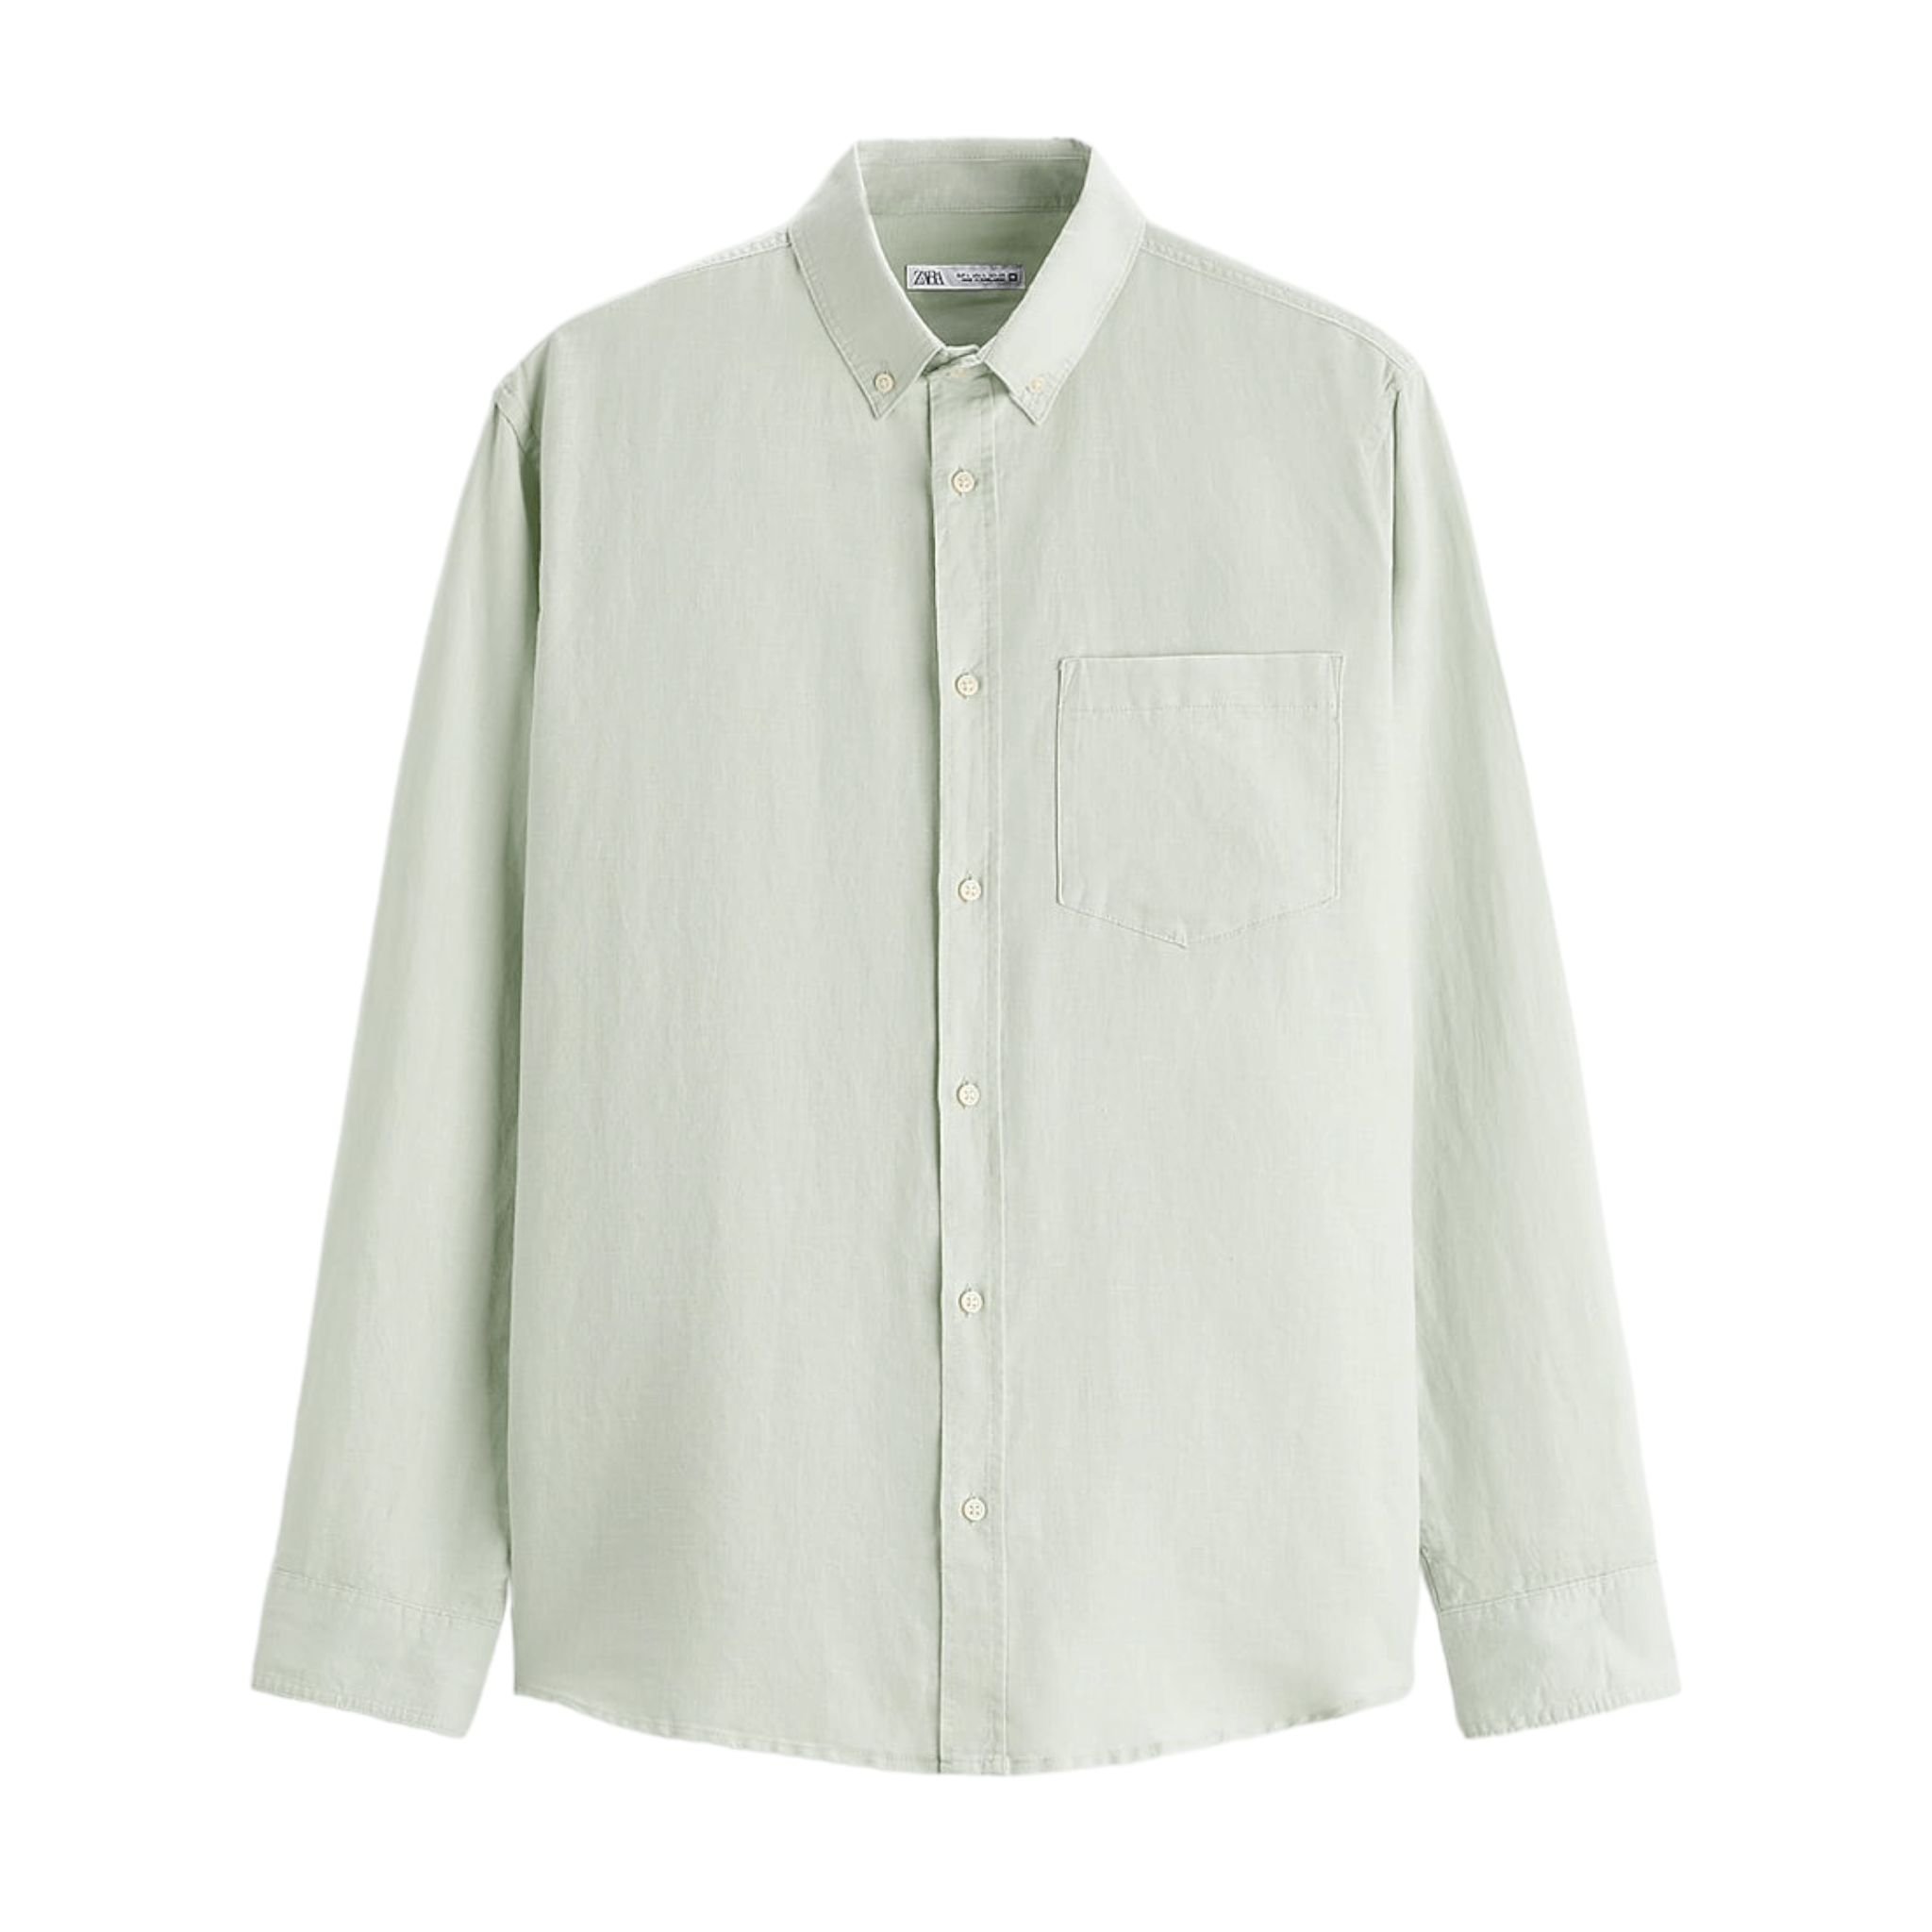 Рубашка Zara Cotton - Linen, светло-зеленый рубашка zara striped cotton linen синий